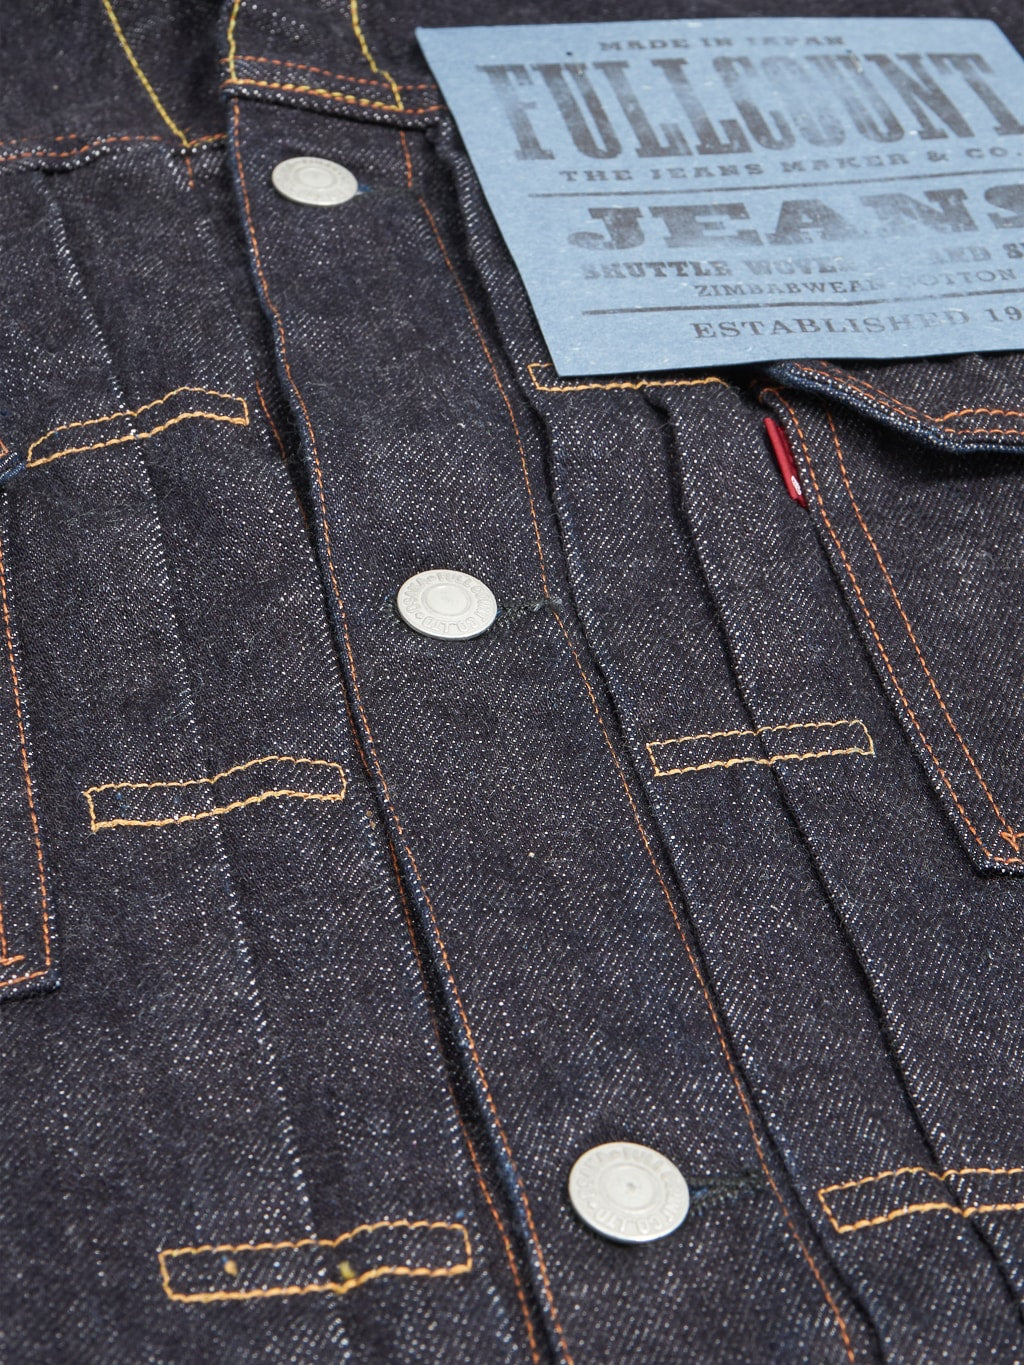 Fullcount 2102XX Type II Denim Jacket fabric